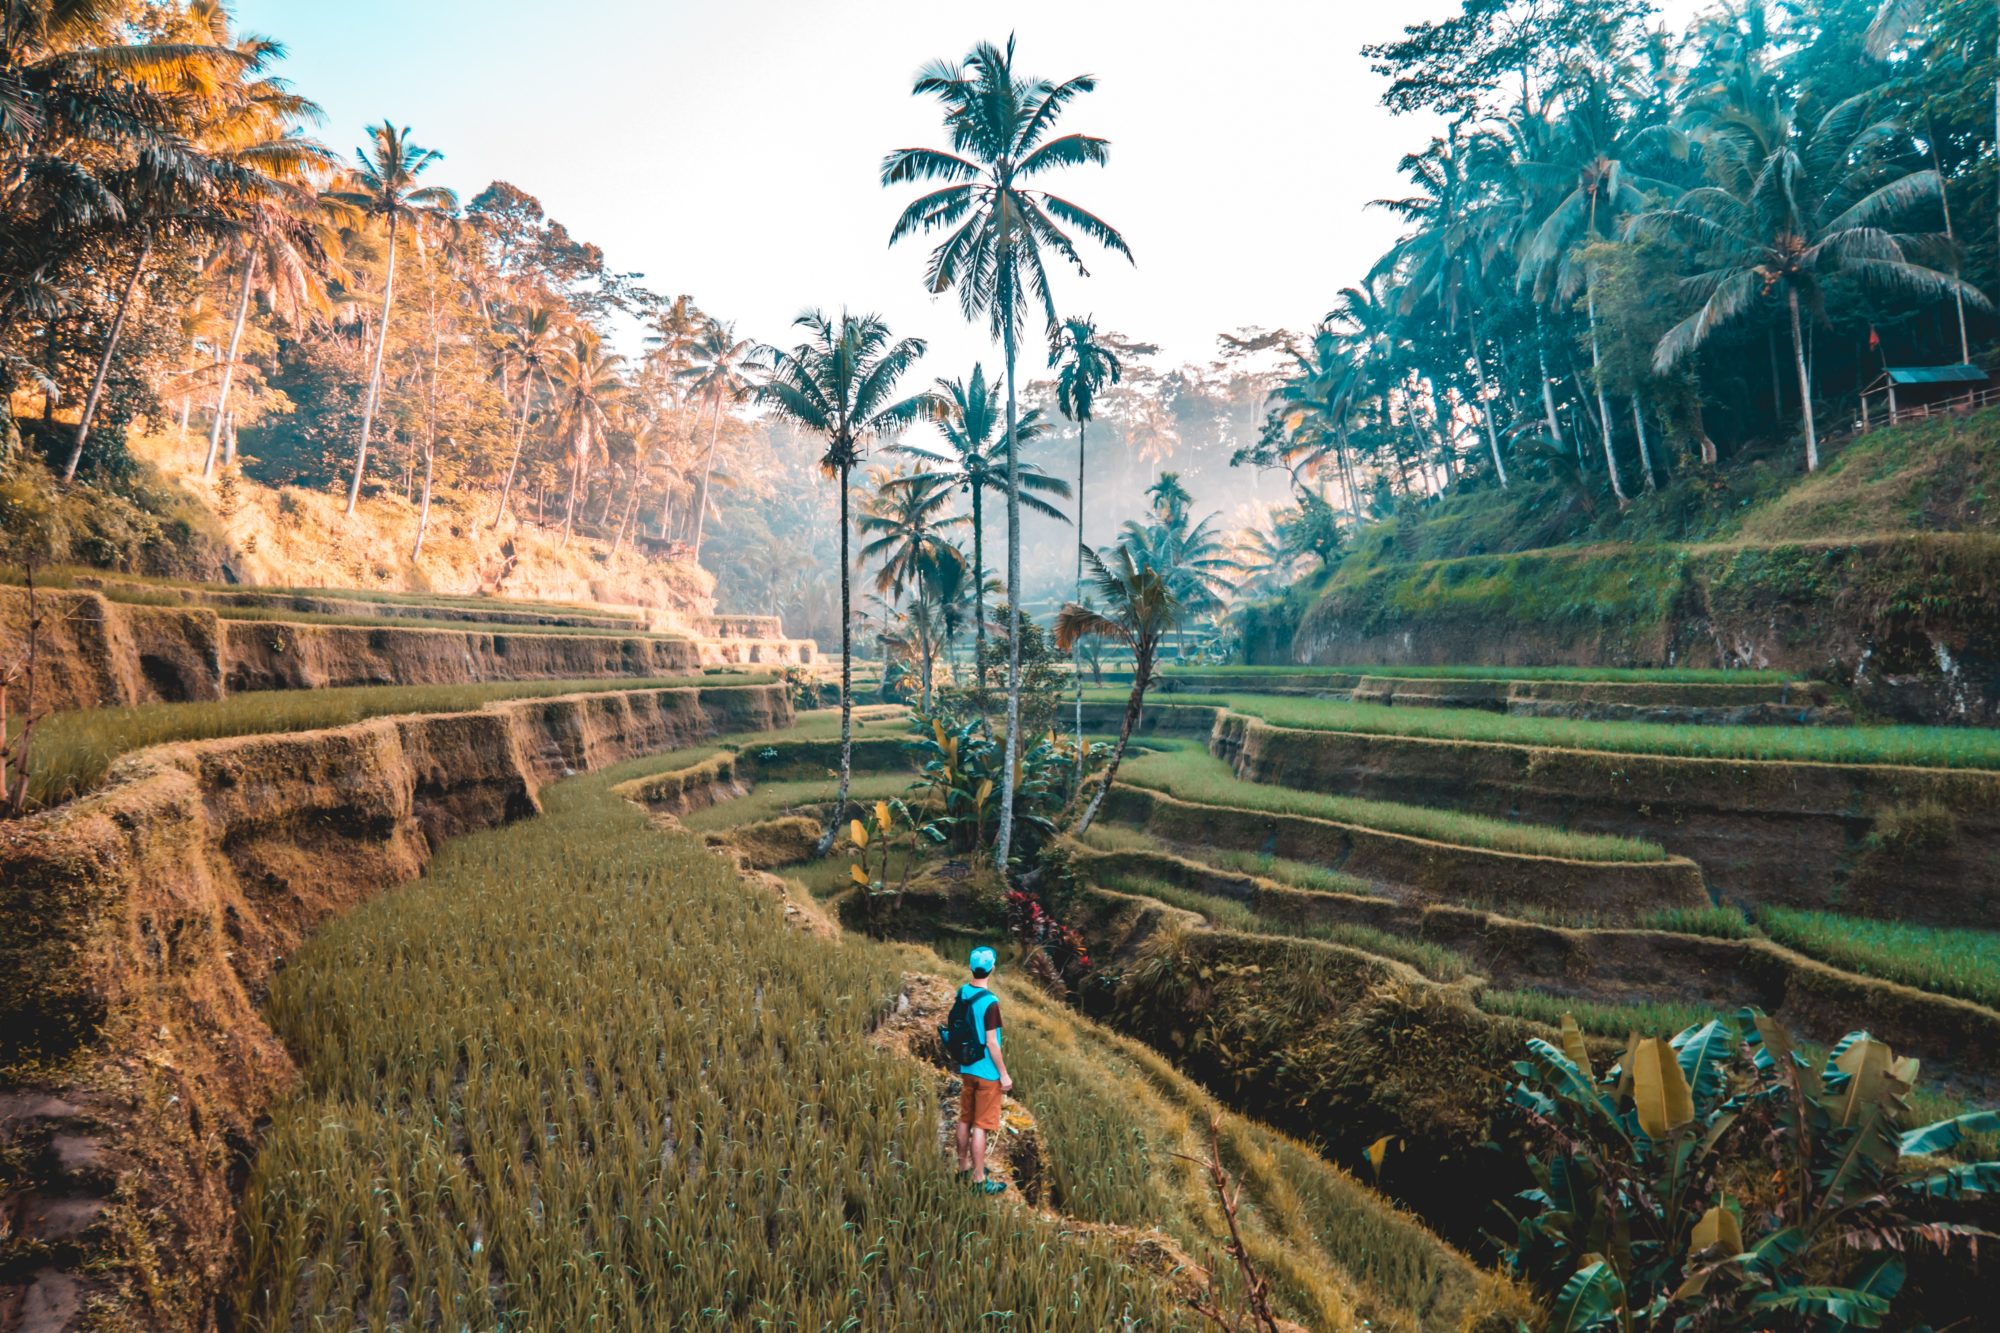 Tegallang Rice Terraces, Indonesia